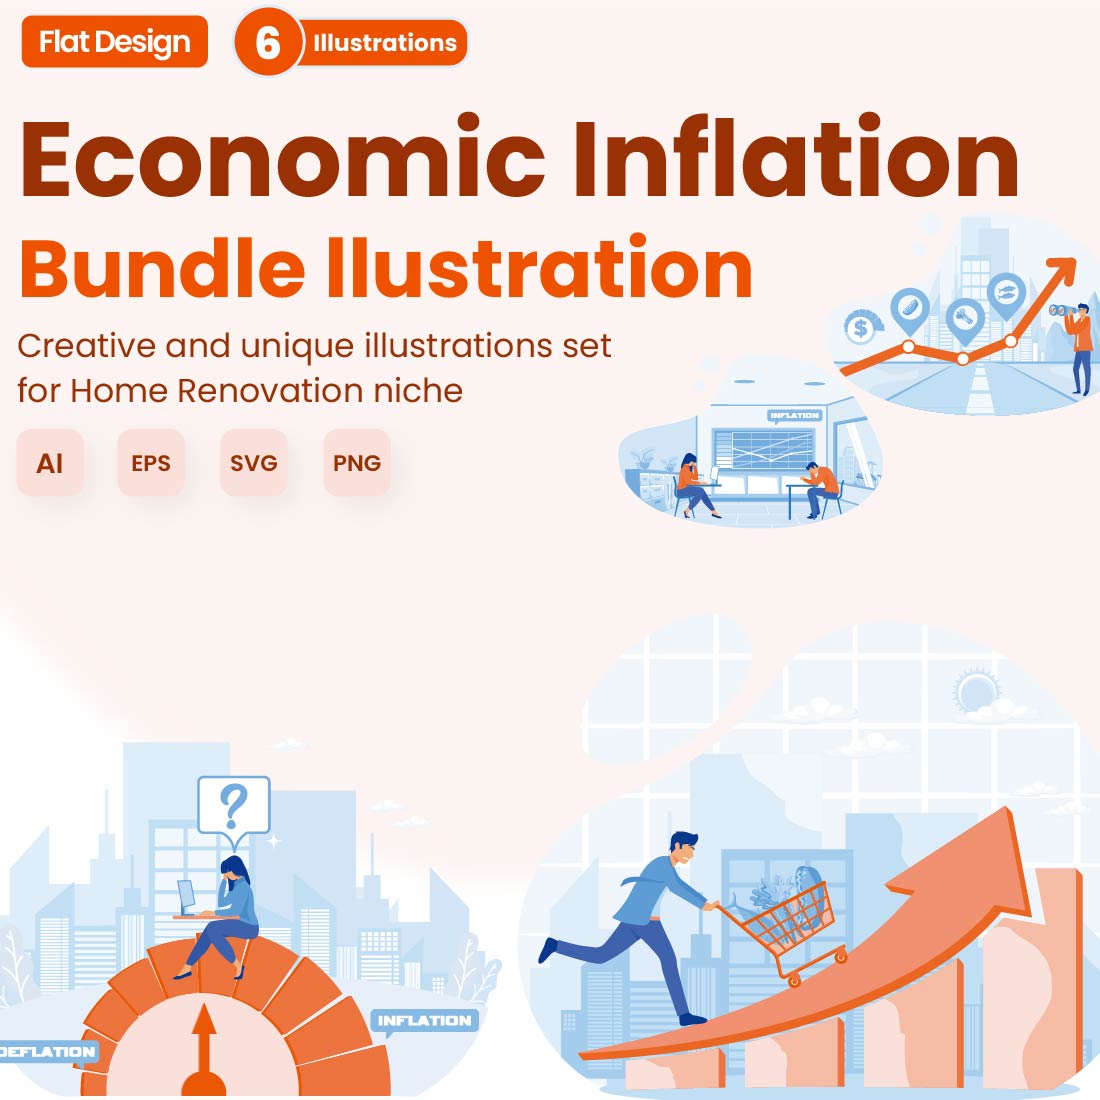 Economic Inflation Illustration Design cover image.